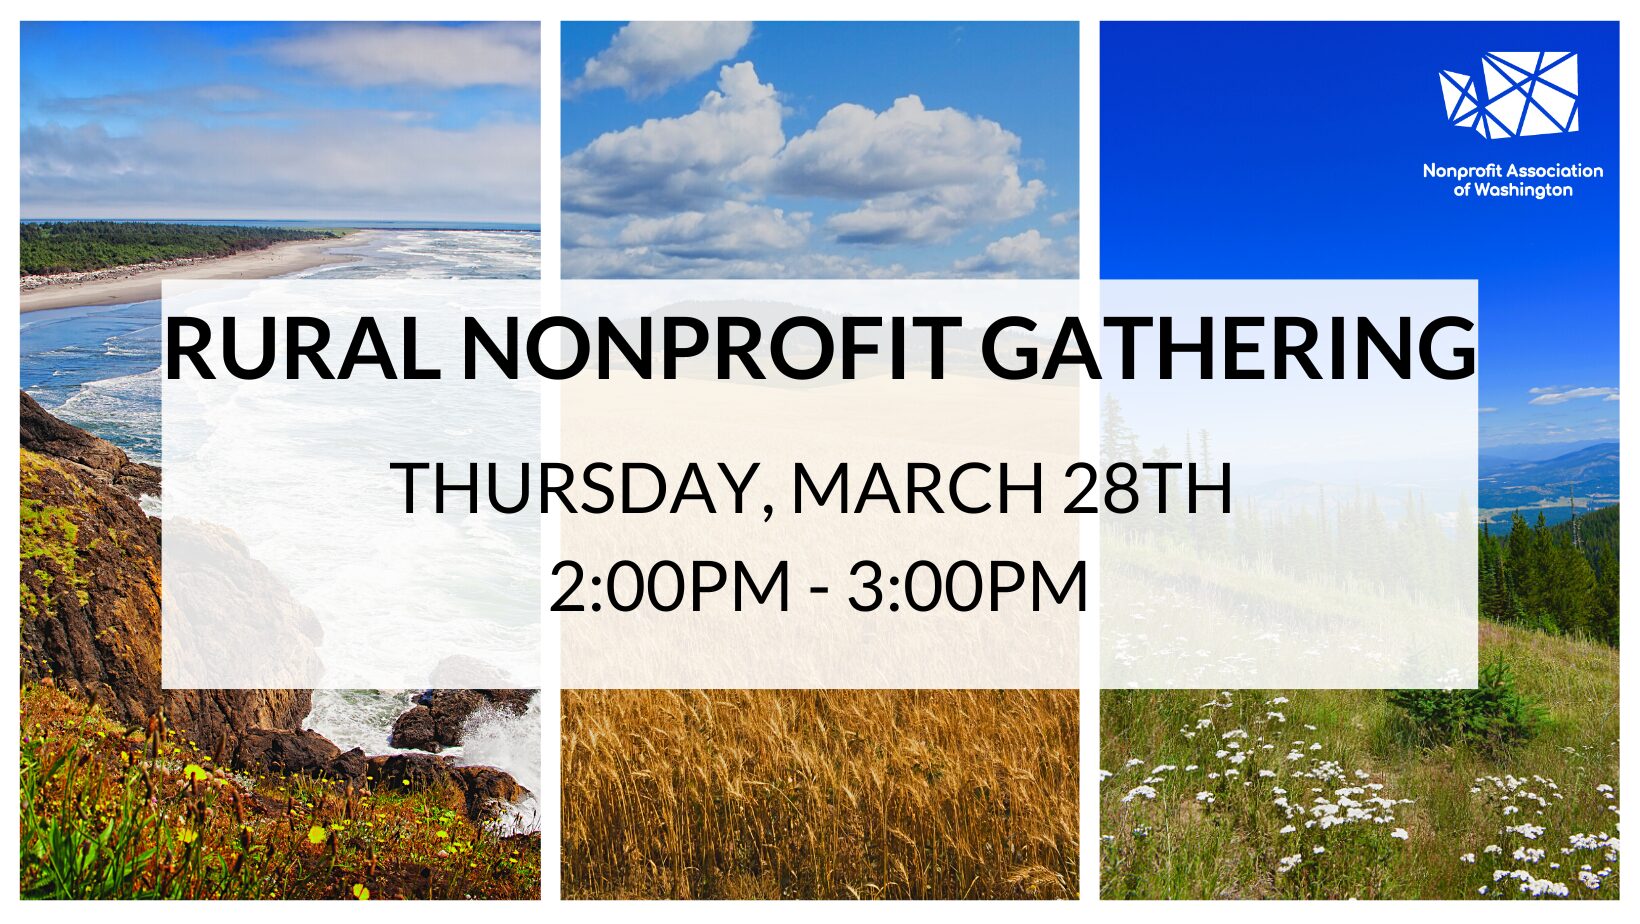 Rural Nonprofit Gathering Thursday March 28th 2:00-3:00 PM